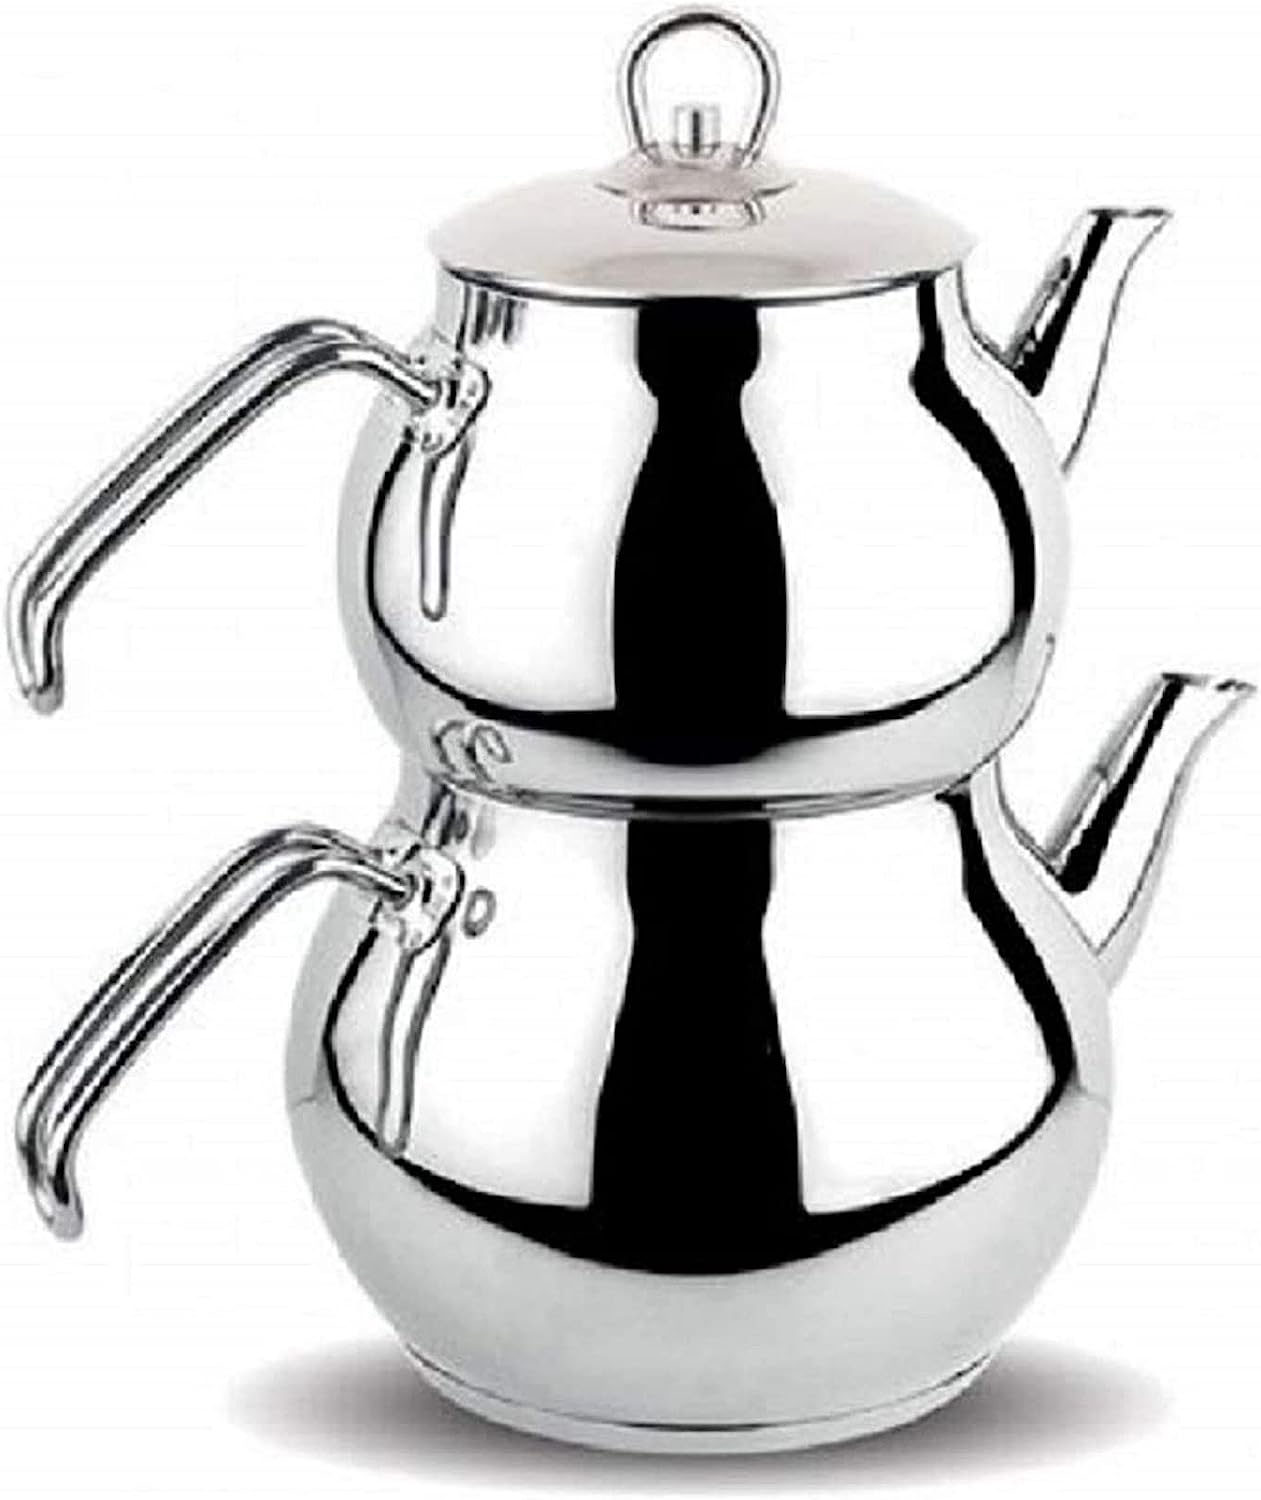 Destalya Turkish Teapot Set, Stainless Steel Double Teapots for Stove Top Tea Maker With Handle Samowar Self-Strength Teapot Kettle Water Caydanlik Takimi (Mini Metal)